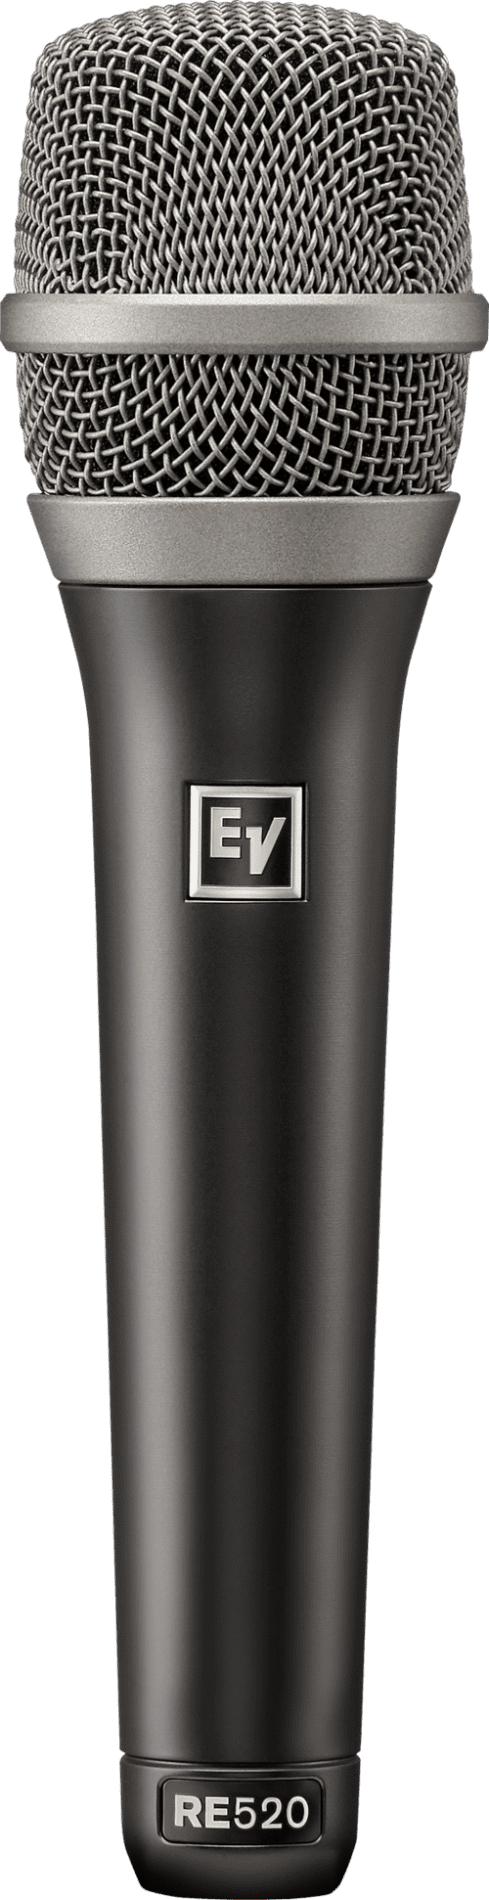 Electro-Voice RE520 Condenser supercardioid vocal microphone